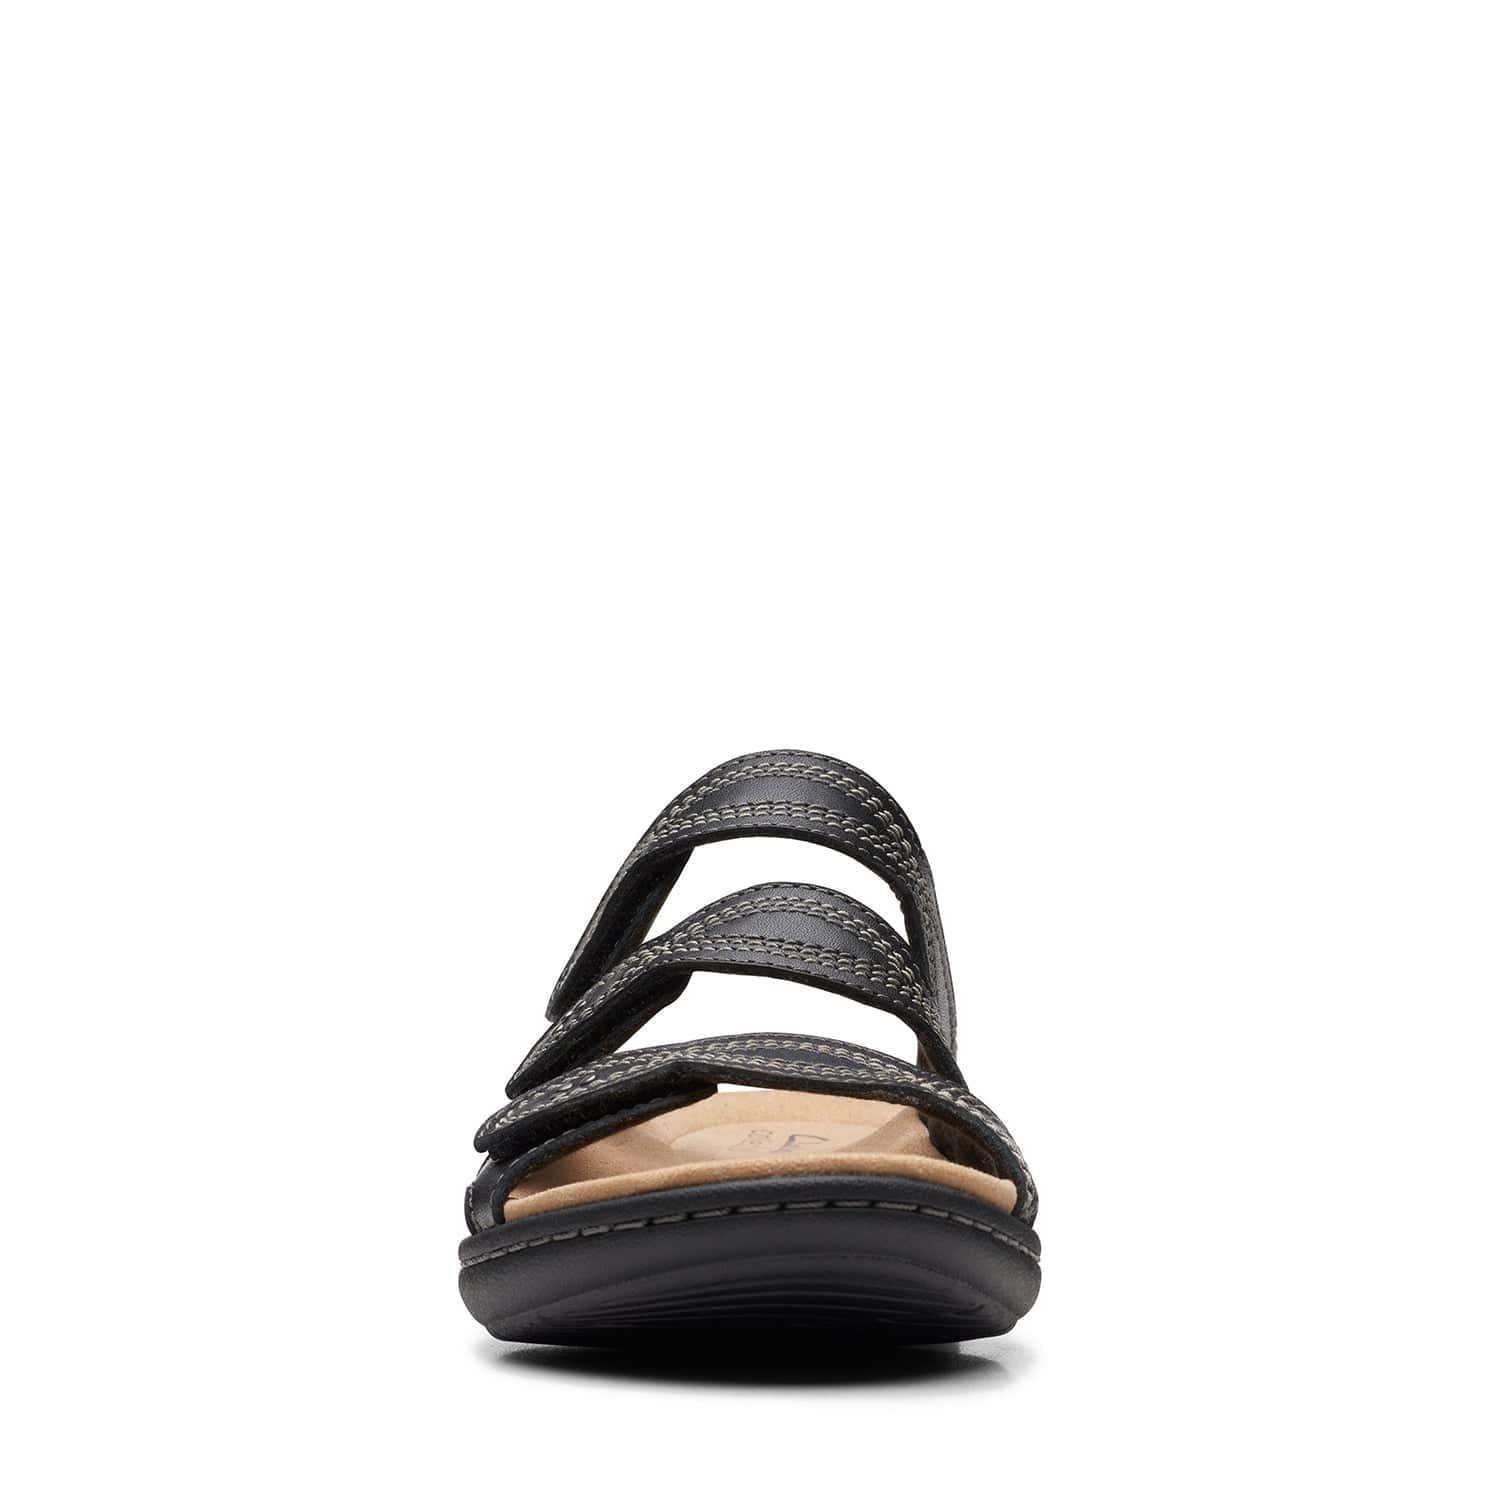 Clarks Laurieann Ayla - Sandals - Black Leather - 261712475 - E Width (Wide Fit)